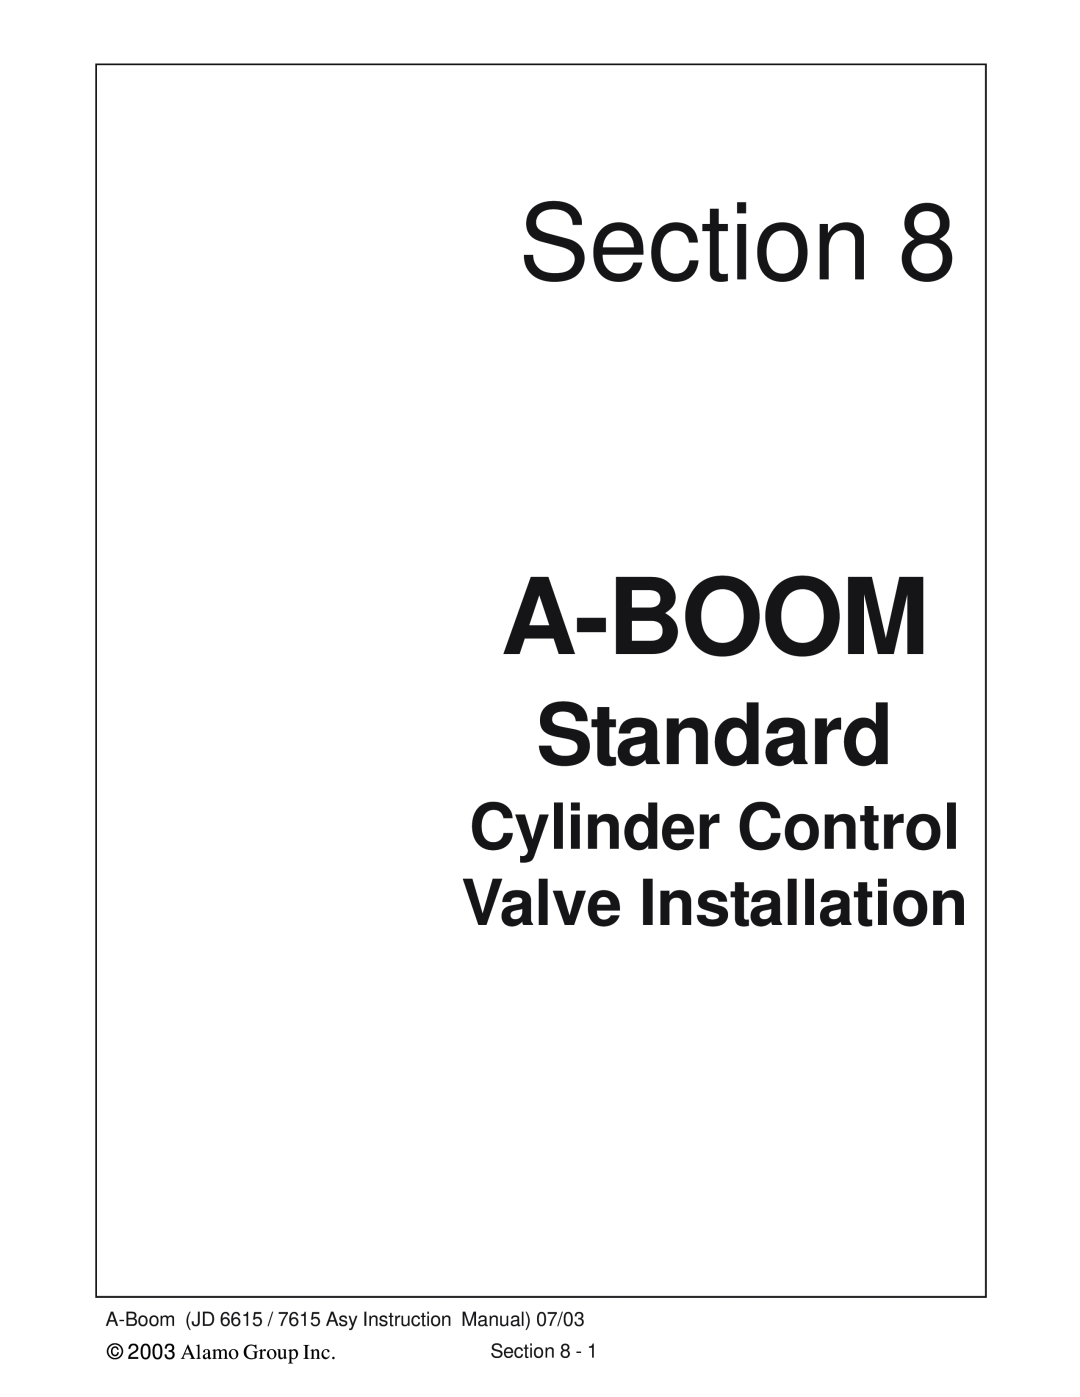 Alamo DSEB-D16/SAS instruction manual Cylinder Control Valve Installation, Section, A-Boom, Standard, Alamo Group Inc 